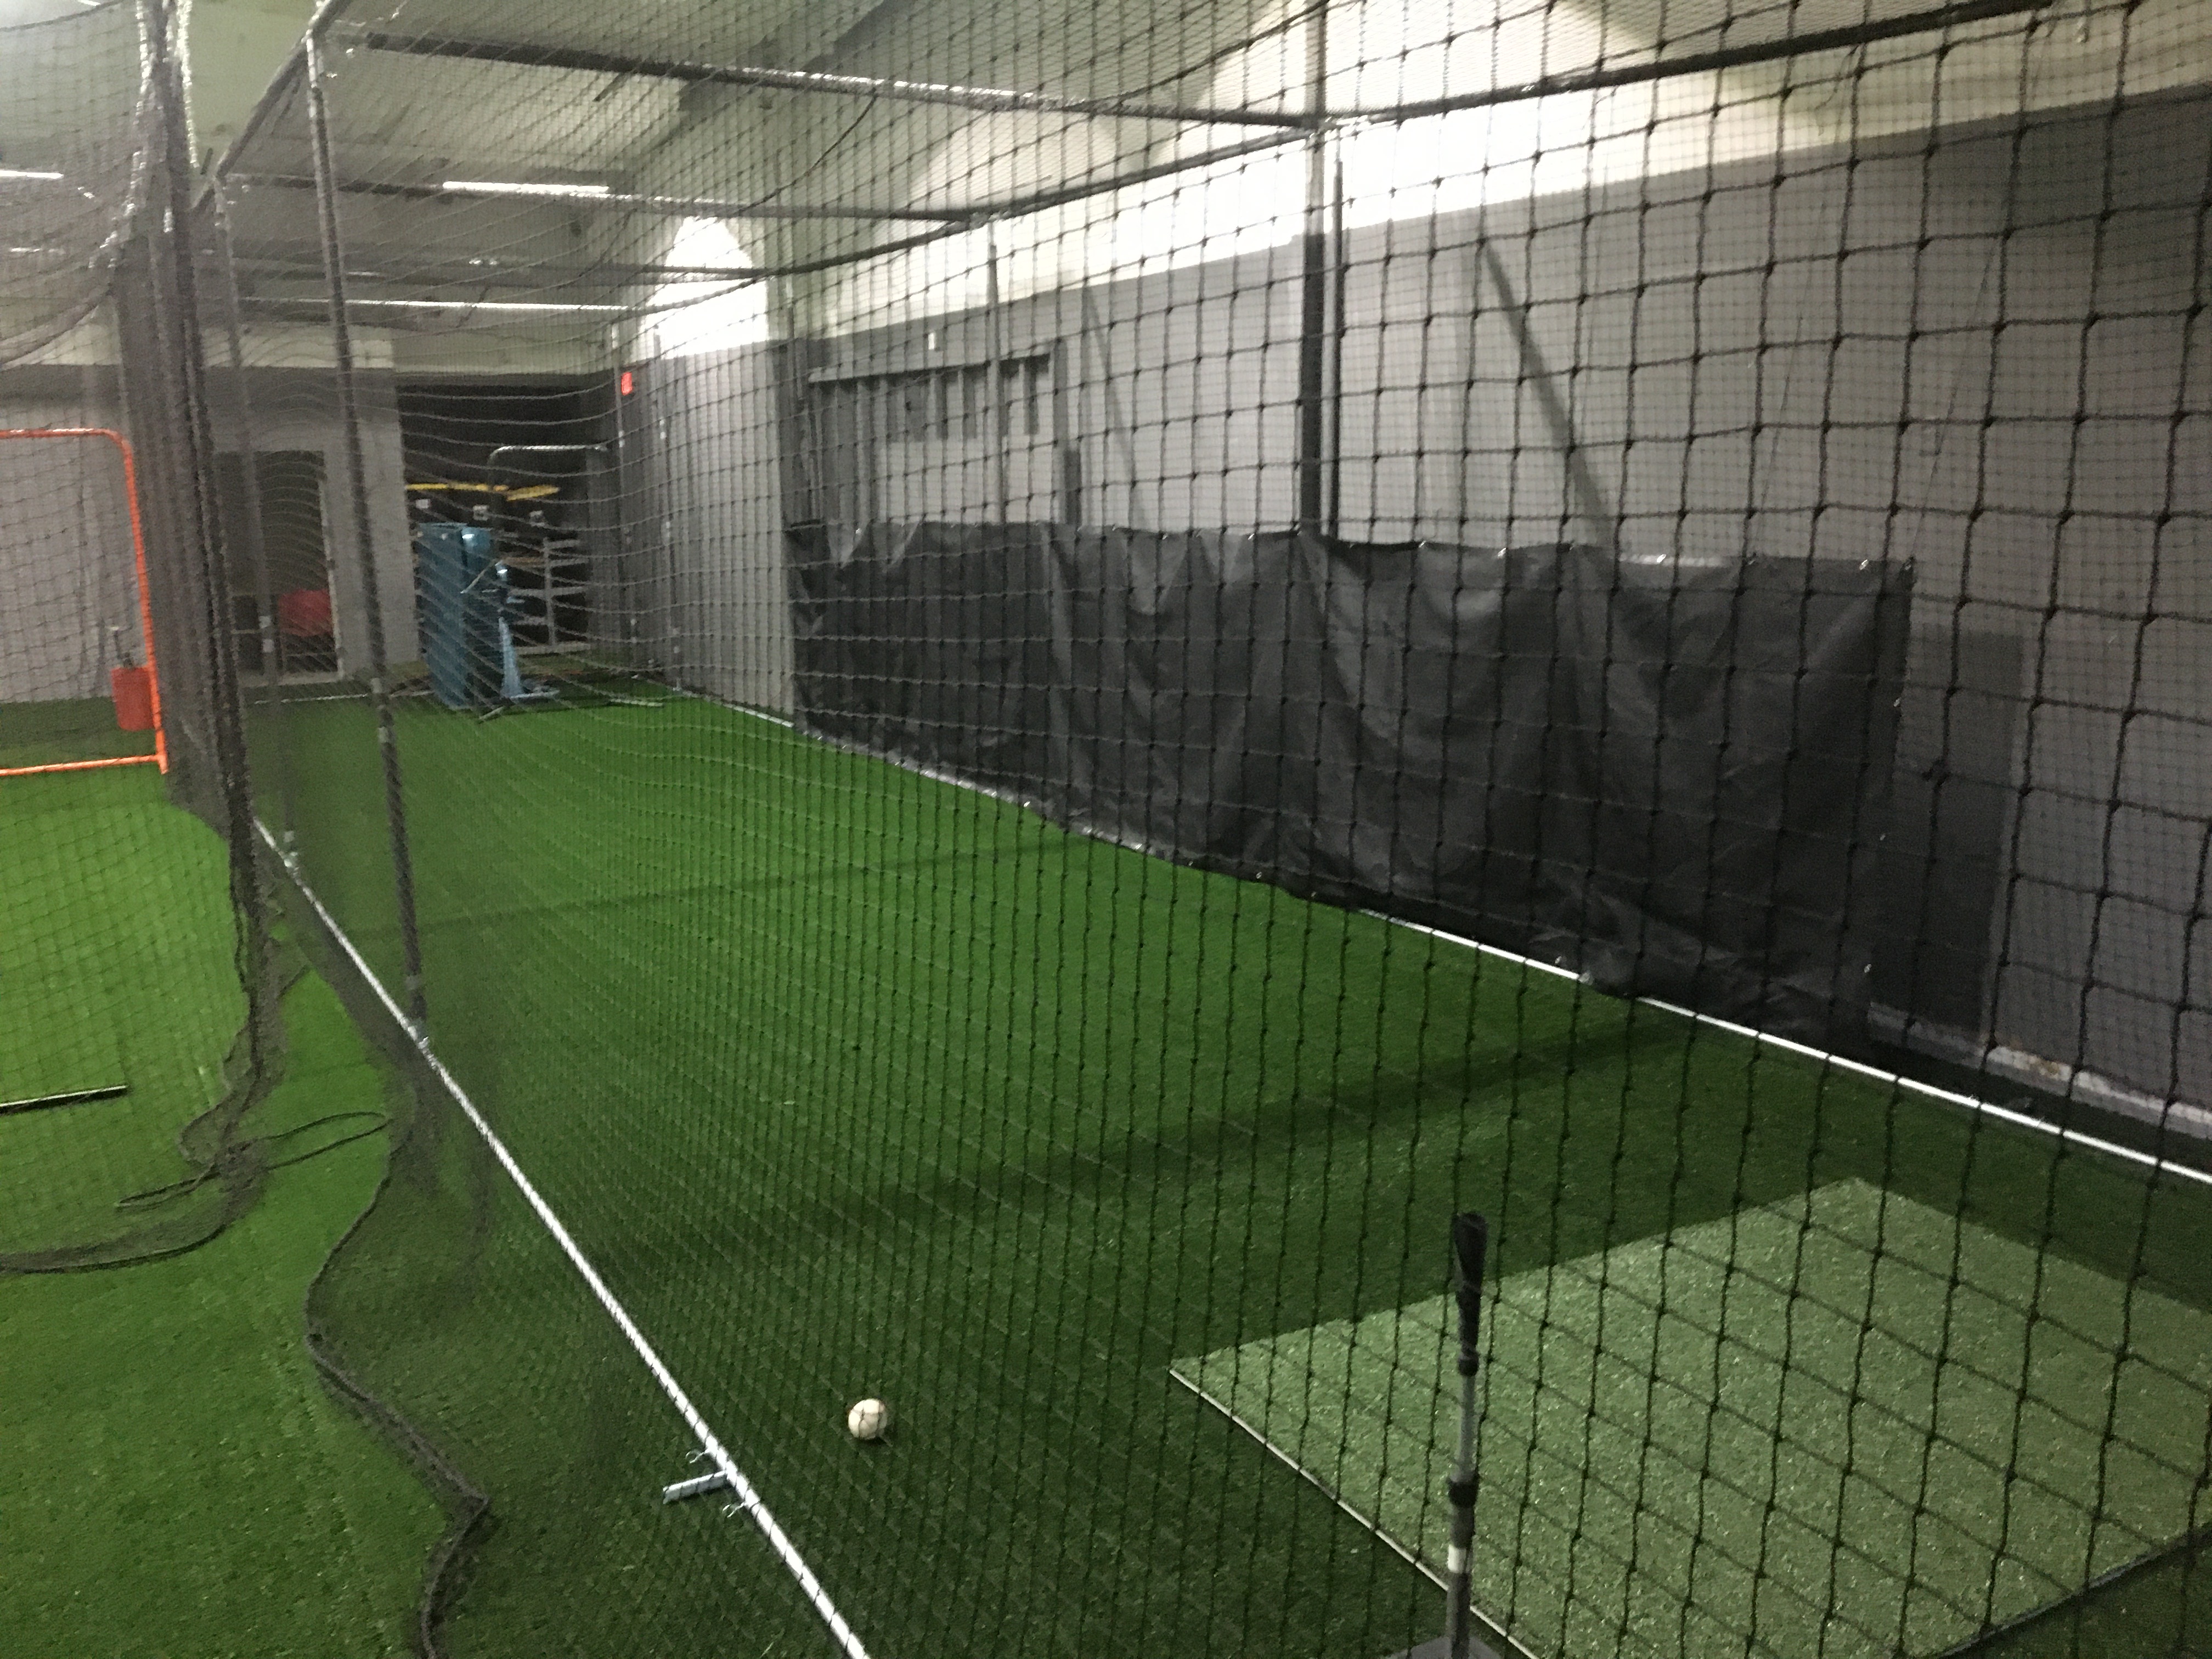 Big batting cage with pitching machine